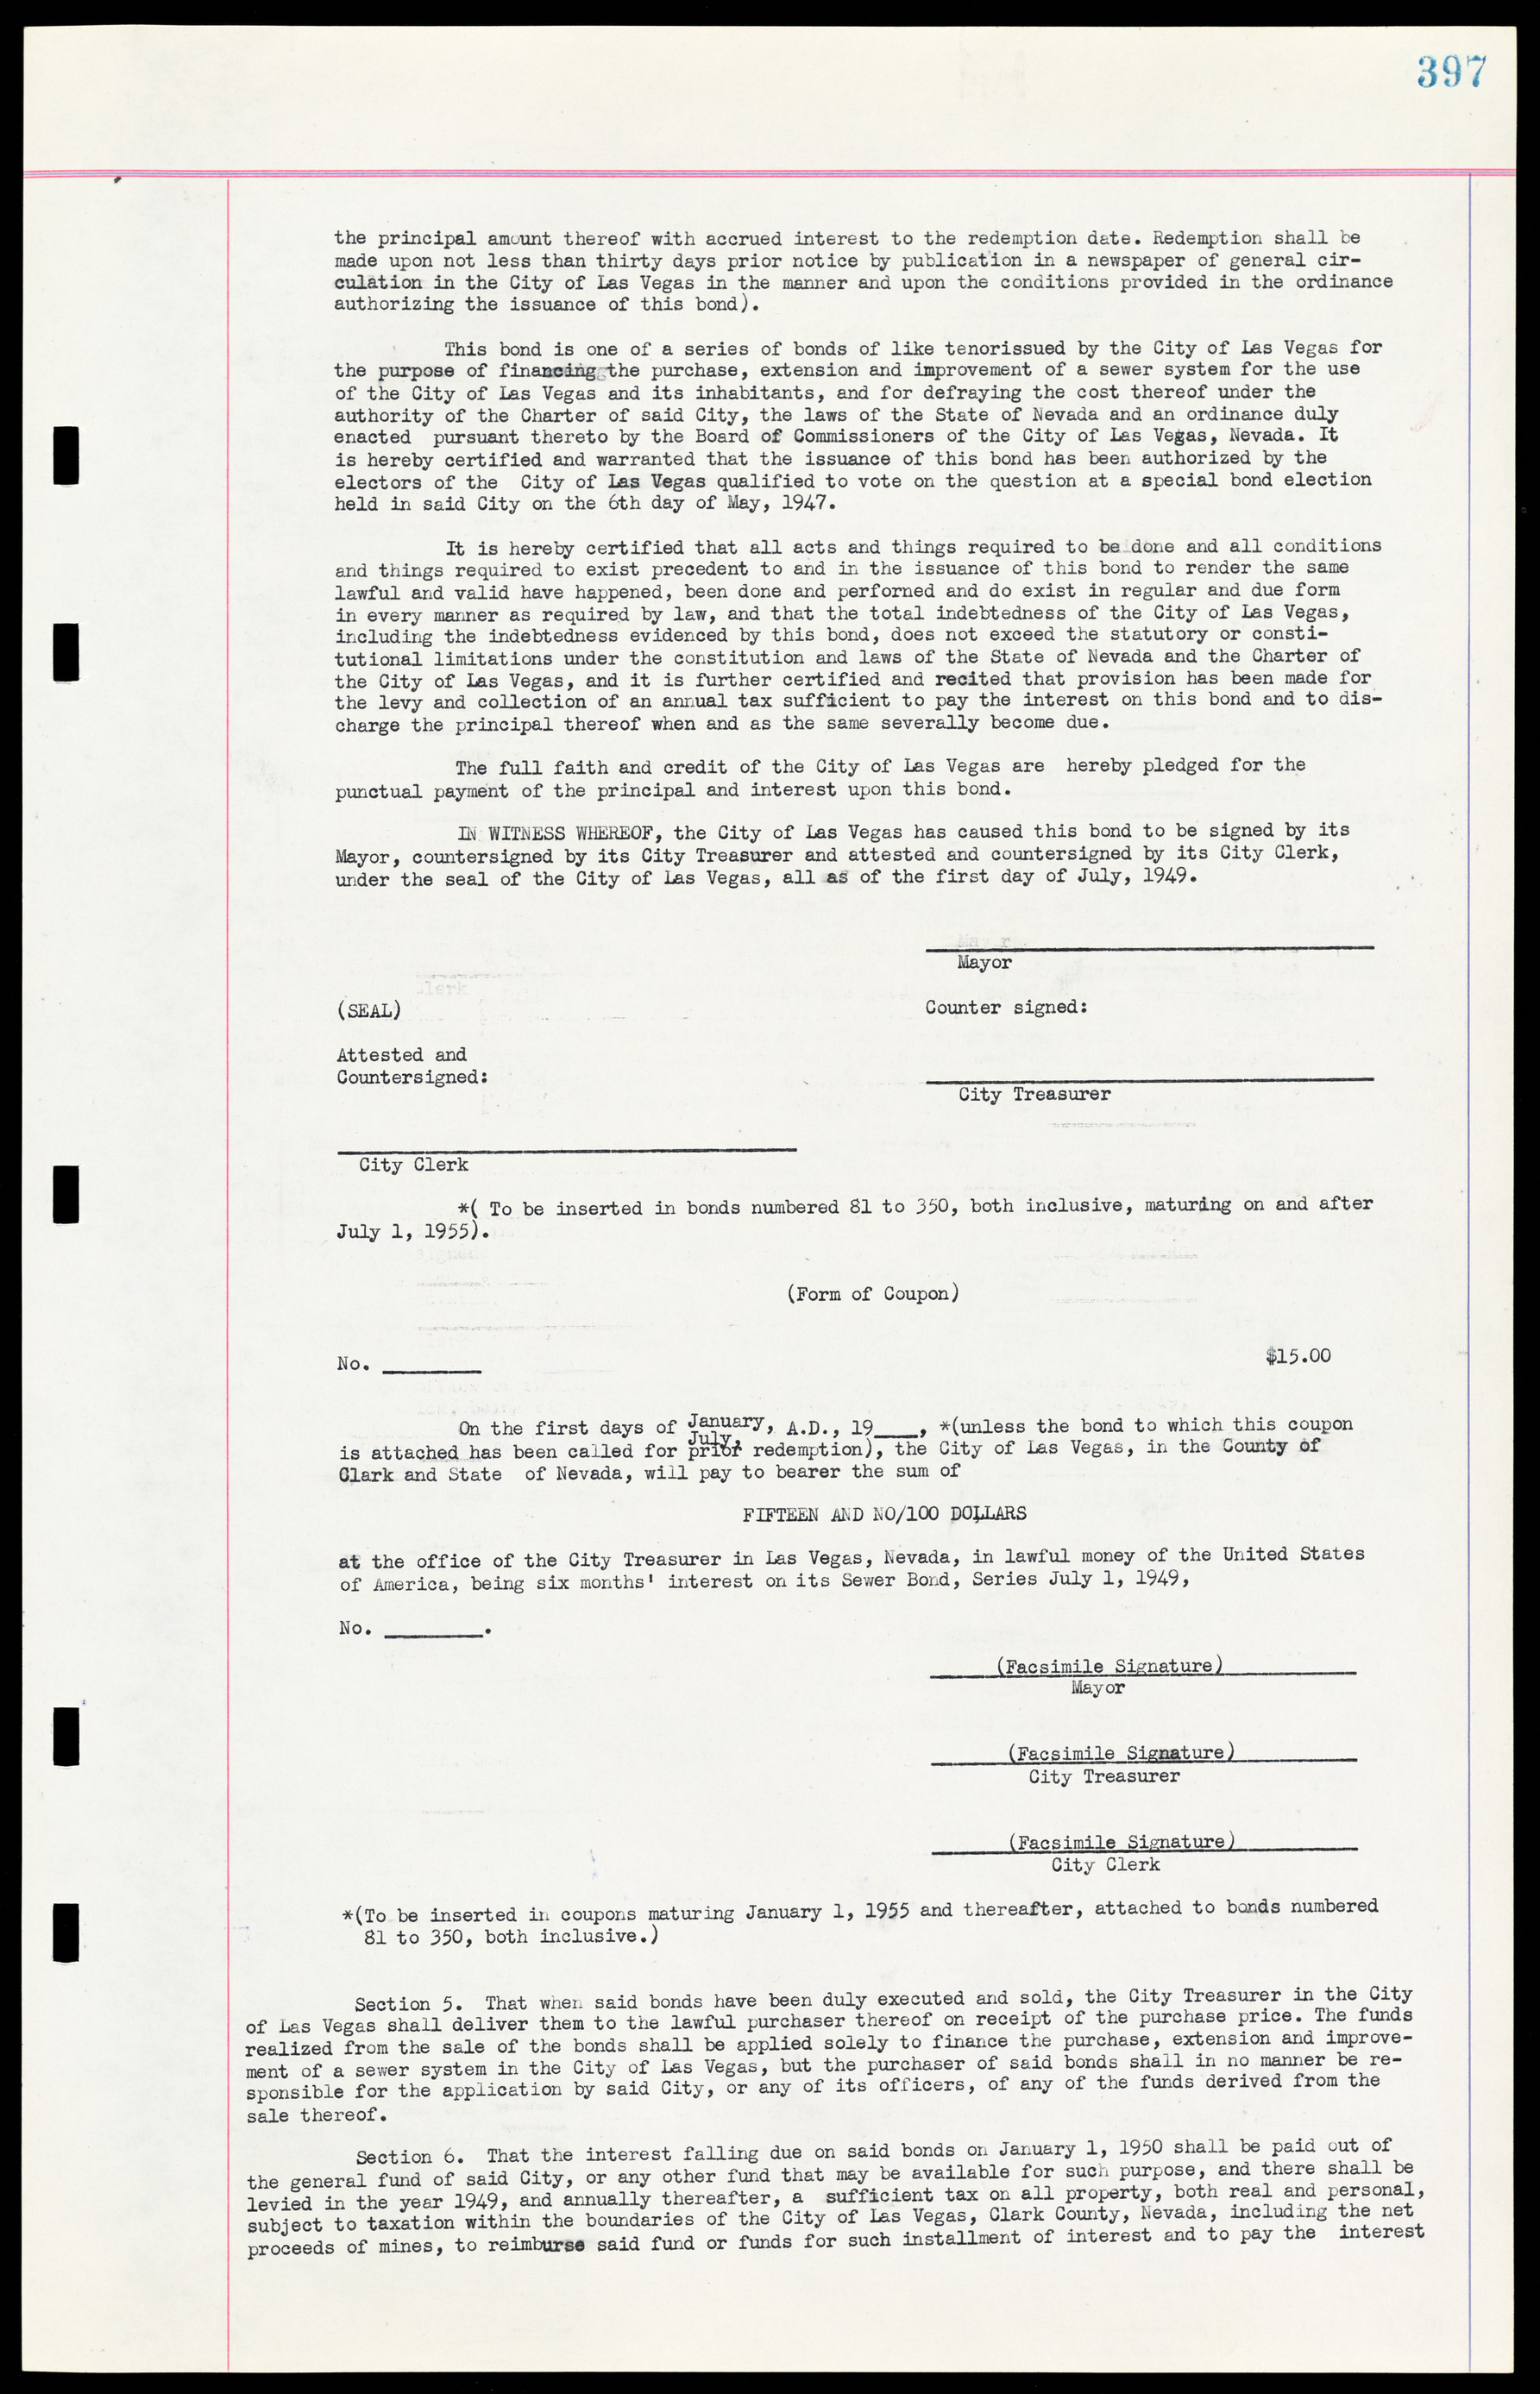 Las Vegas City Ordinances, March 31, 1933 to October 25, 1950, lvc000014-426